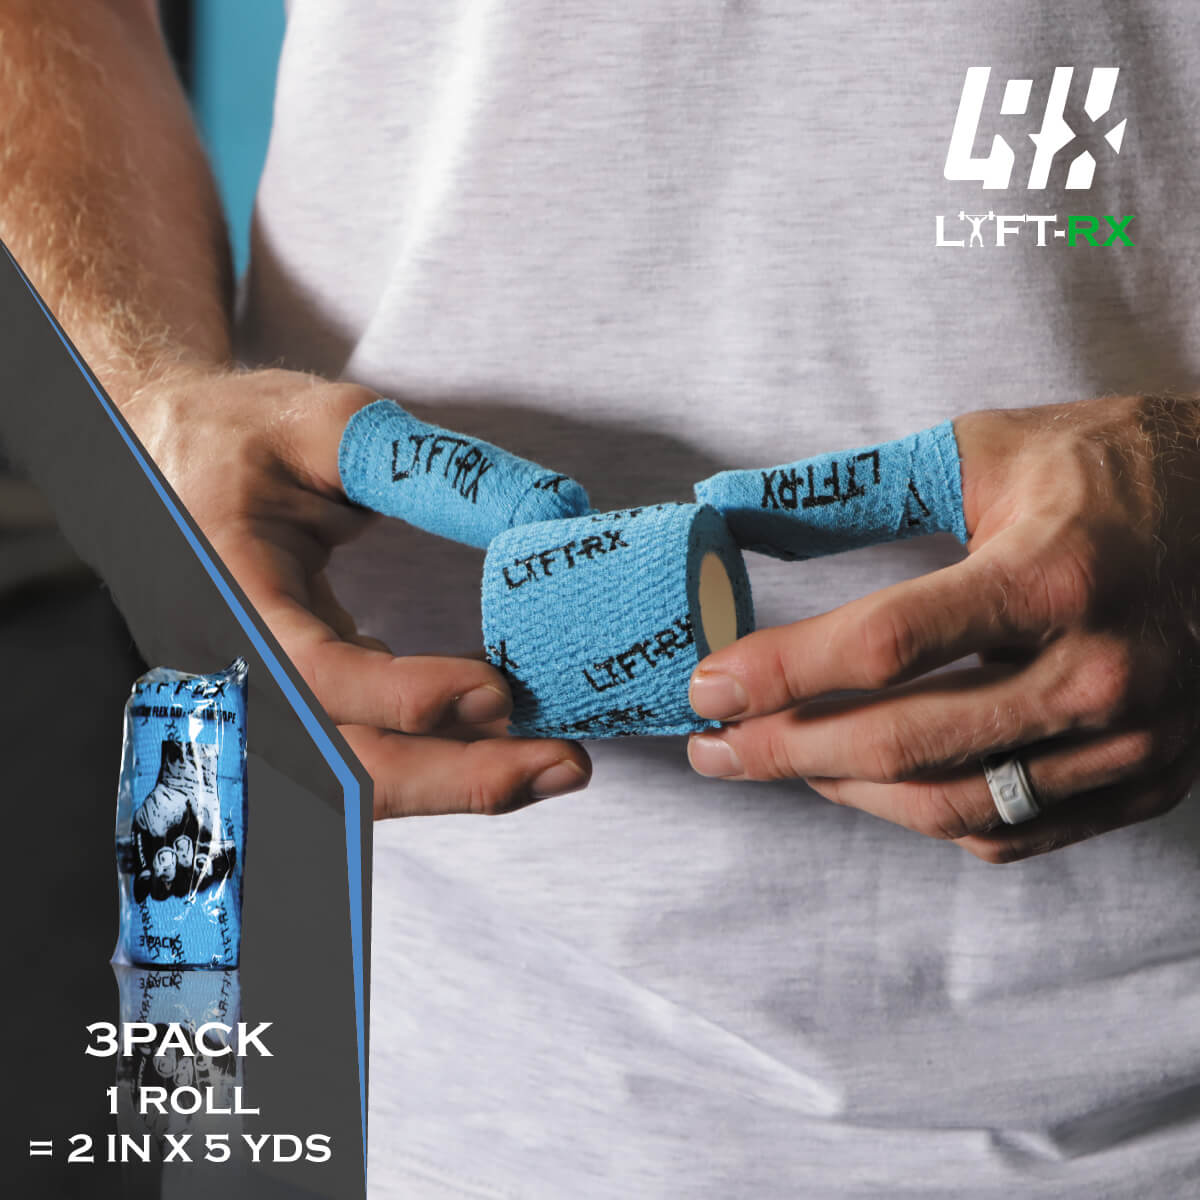 LYFT-RX Weightlifting Hook Grip Tape - Blue 3PACK, 2-inch